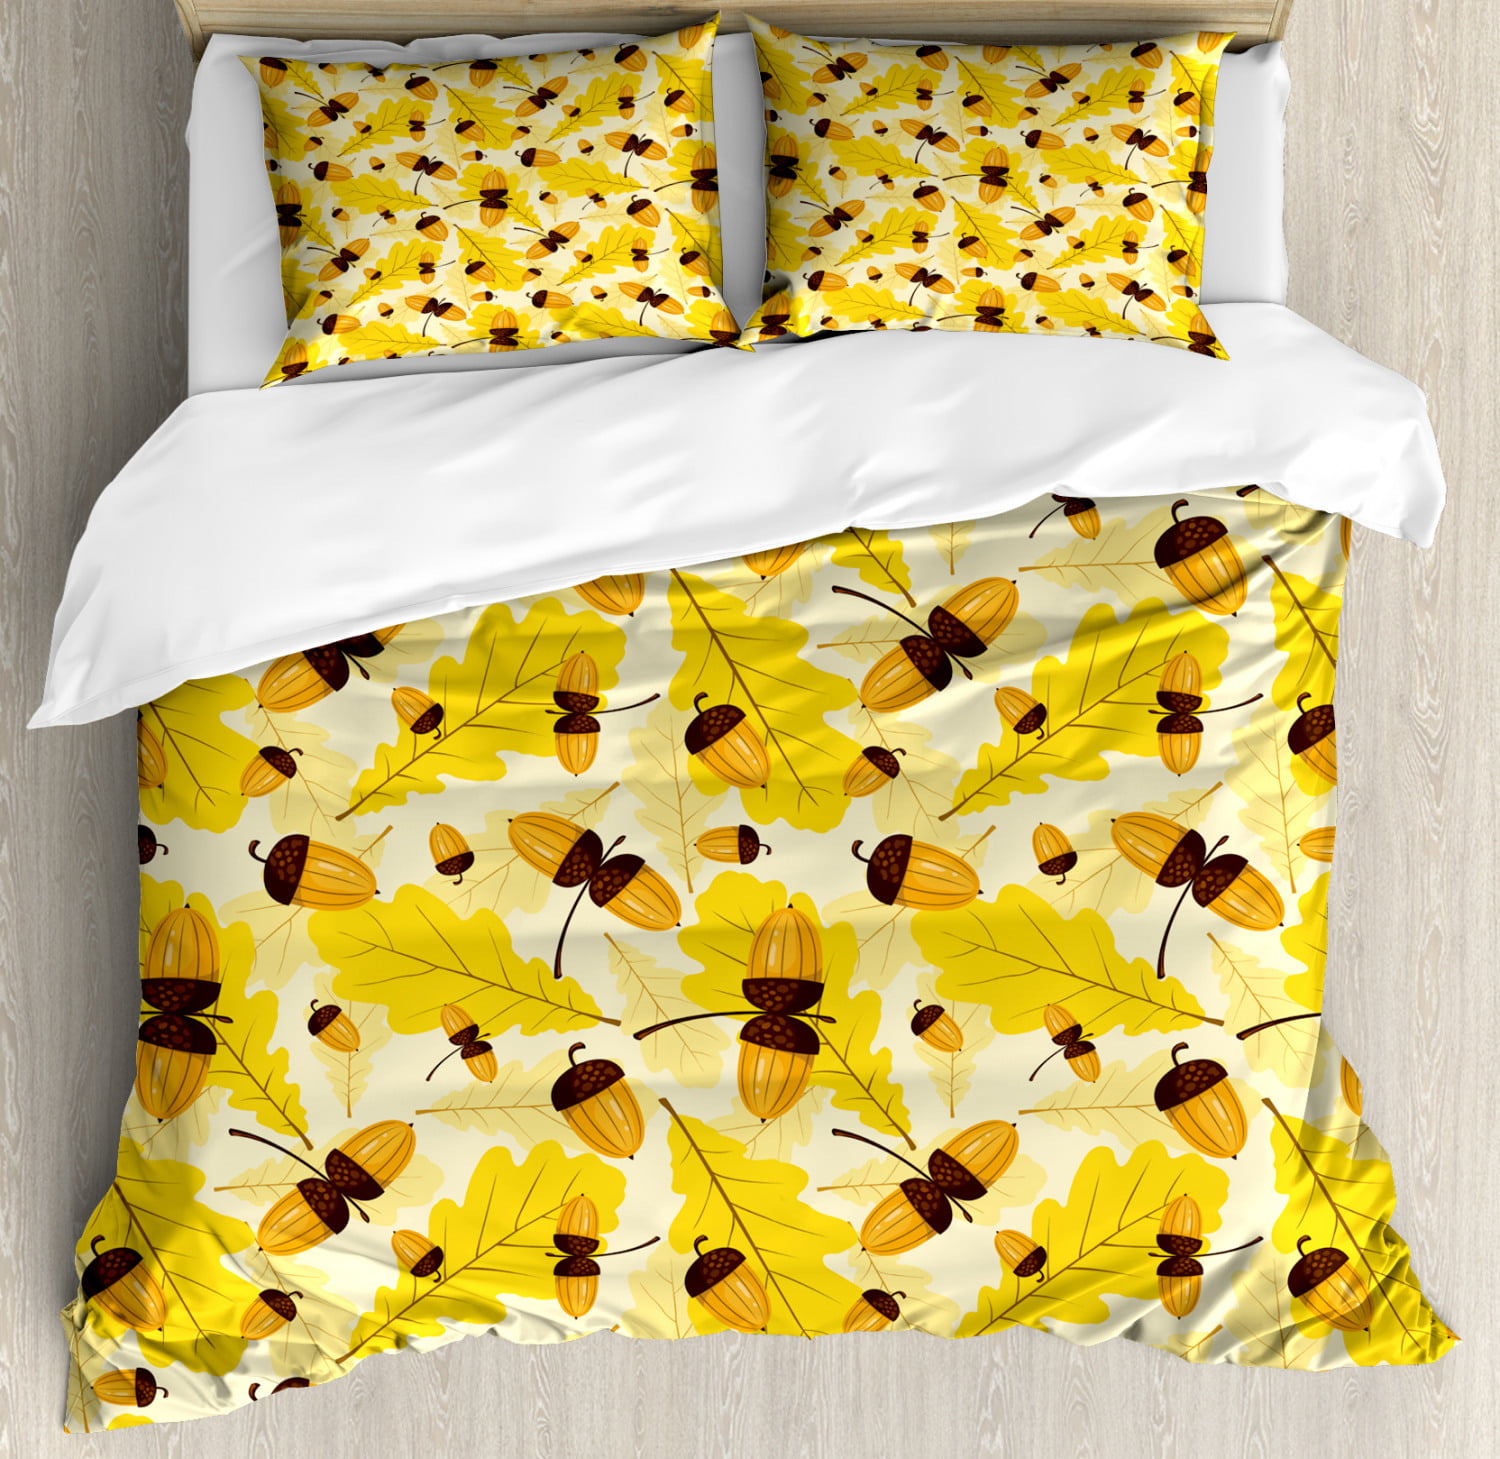 MicBridal Girls Pineapple Duvet Cover White Yellow Background Cotton Comforter Cover for Women Children Teen Kids Adults 